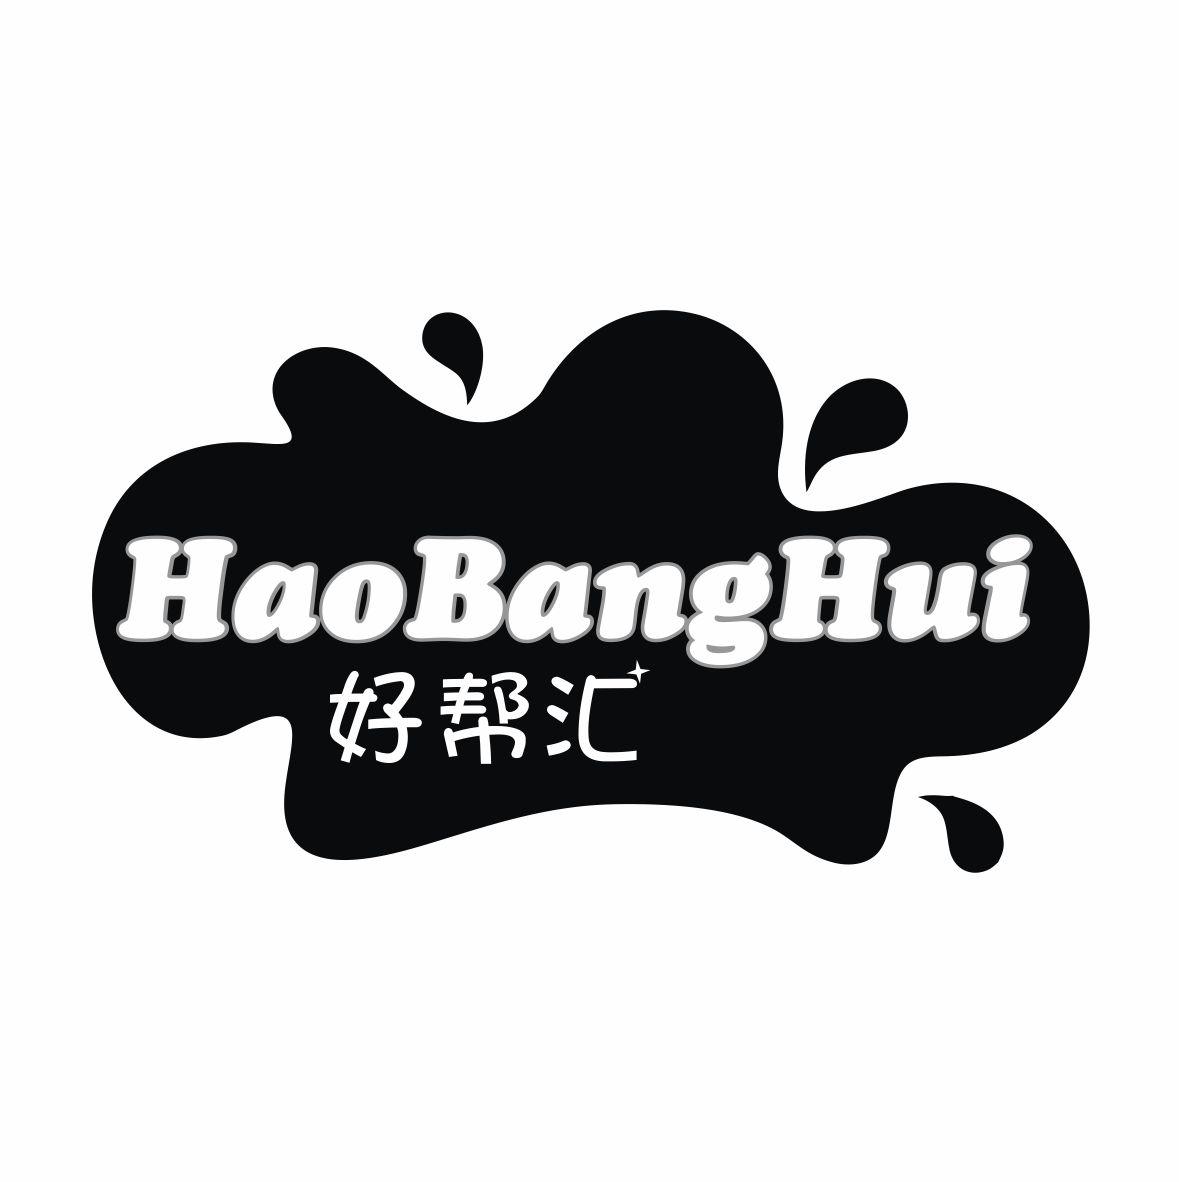 好帮汇HAOBANGHUIleiyangshi商标转让价格交易流程